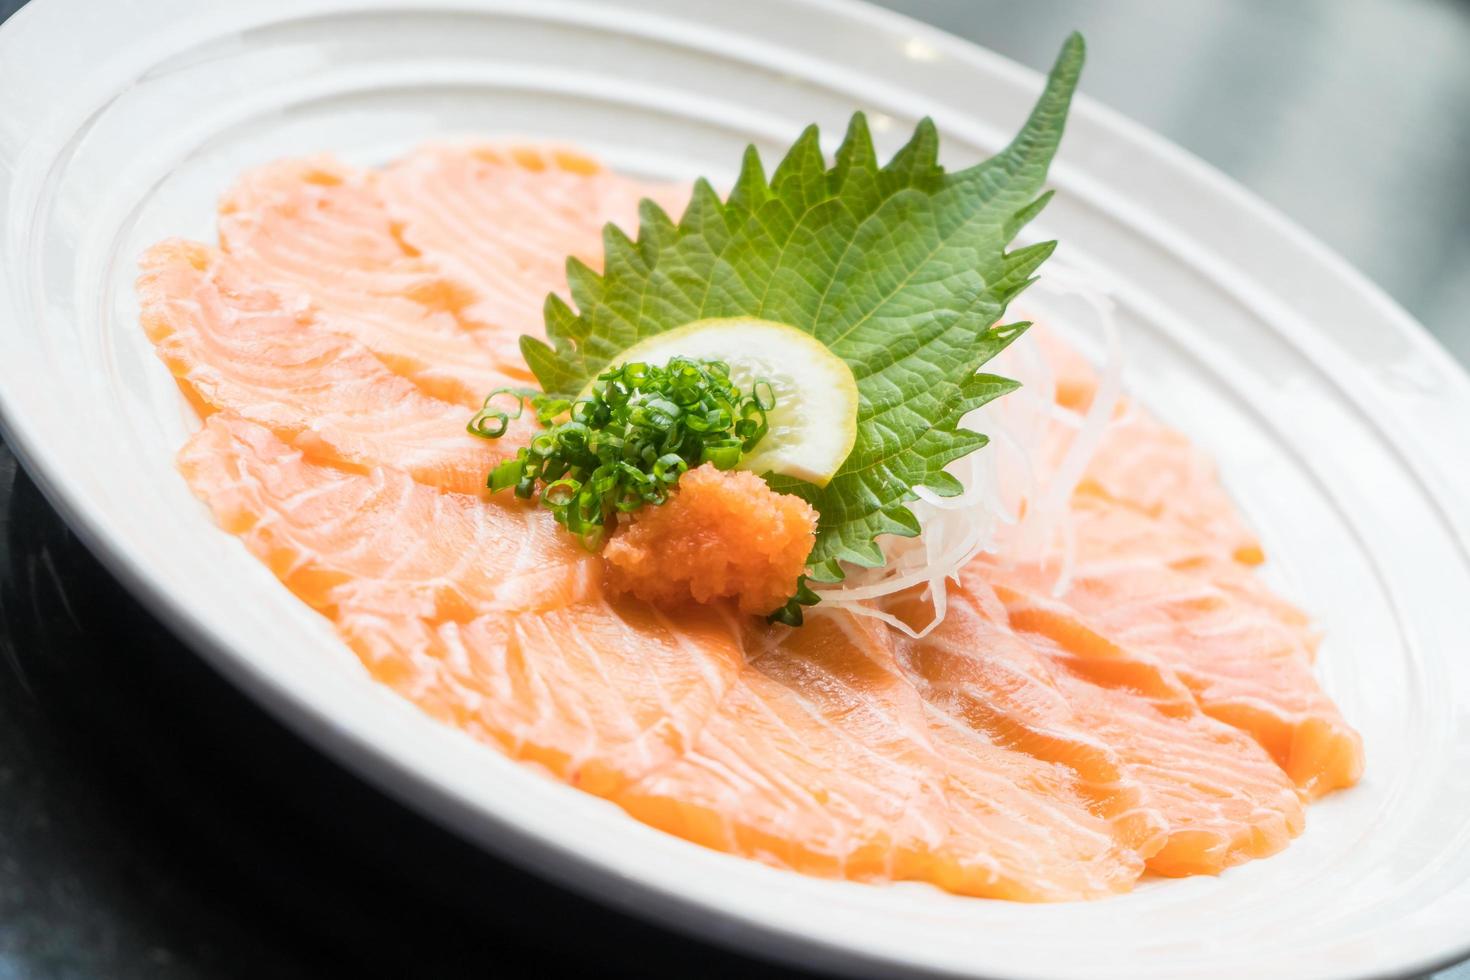 rauwe verse zalm sashimi foto